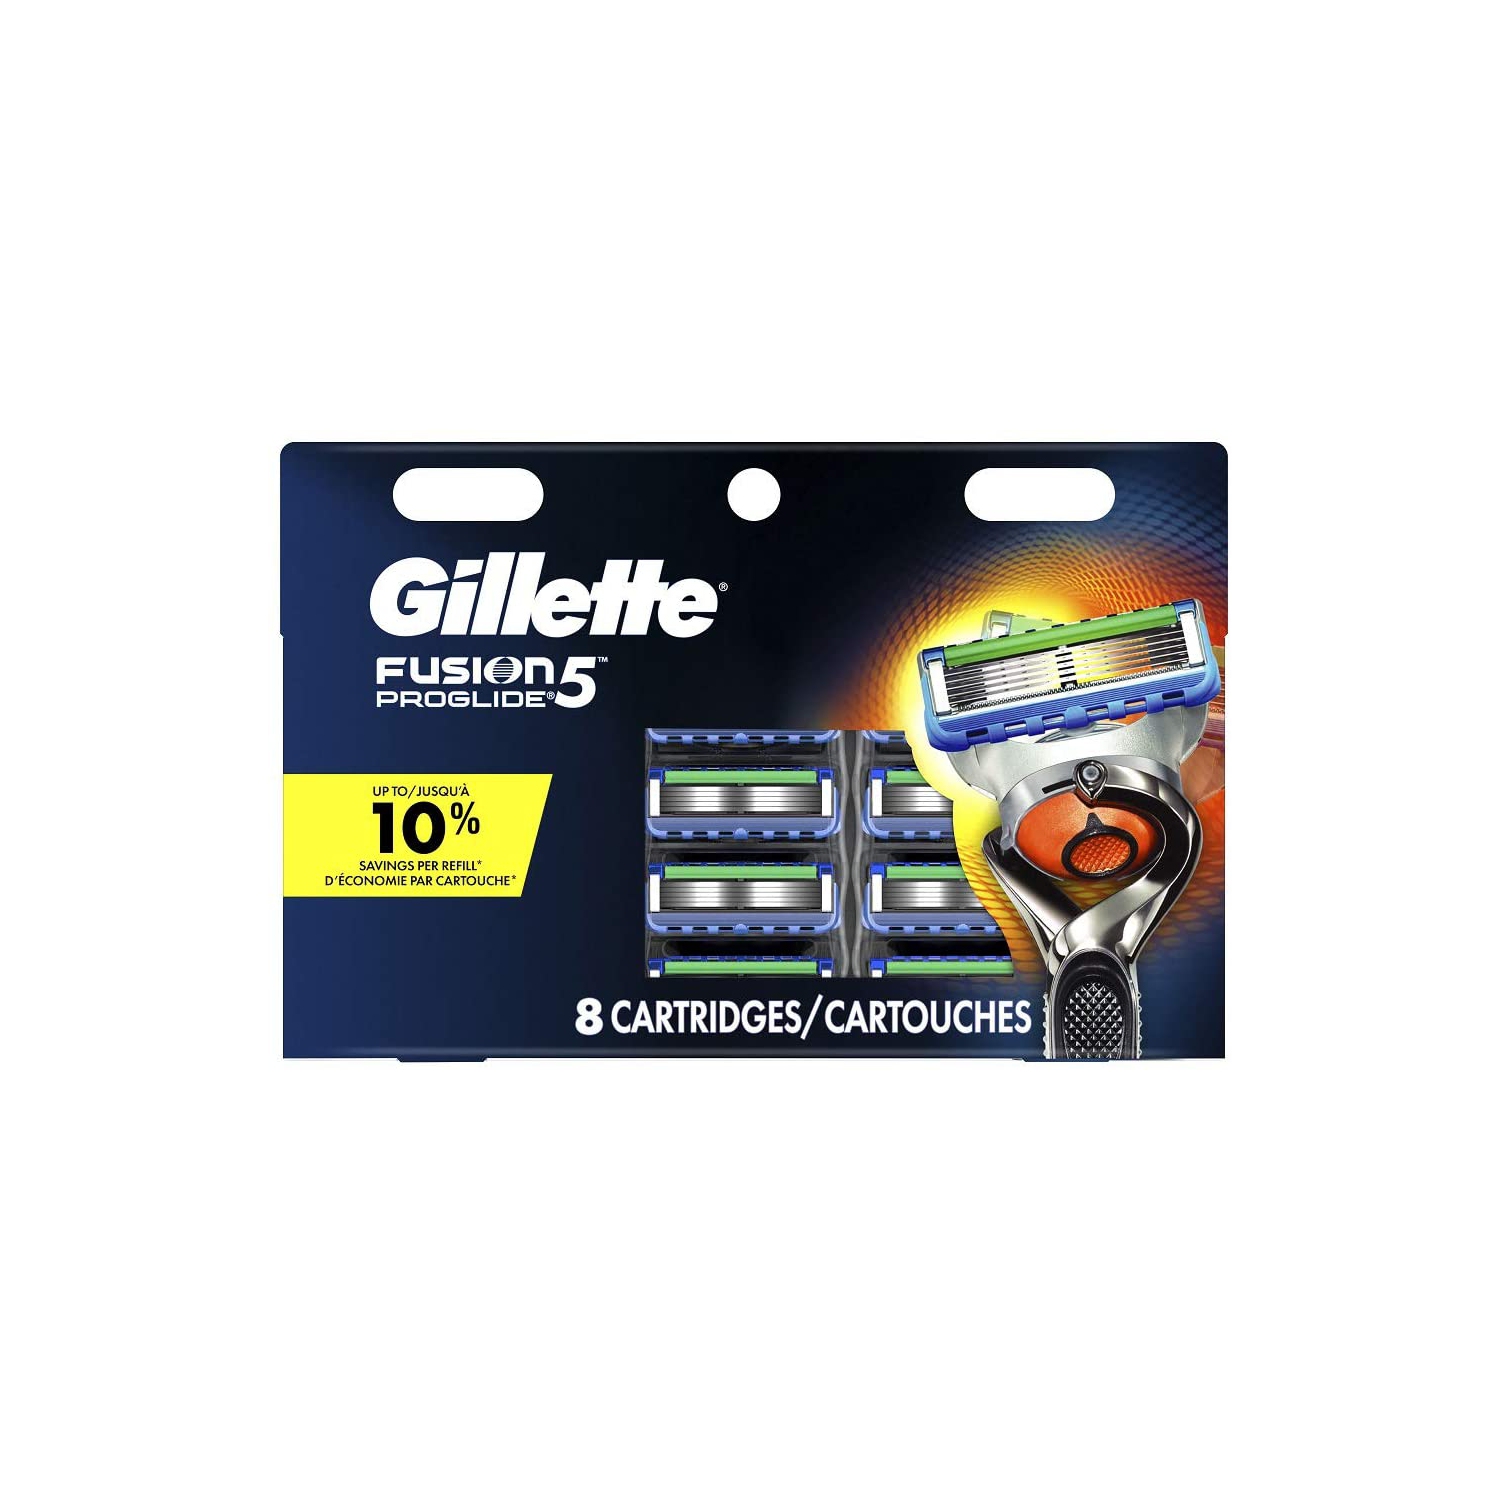 Gillette Fusion 5 Proglide 8Ct Cartridges Card - Brand New